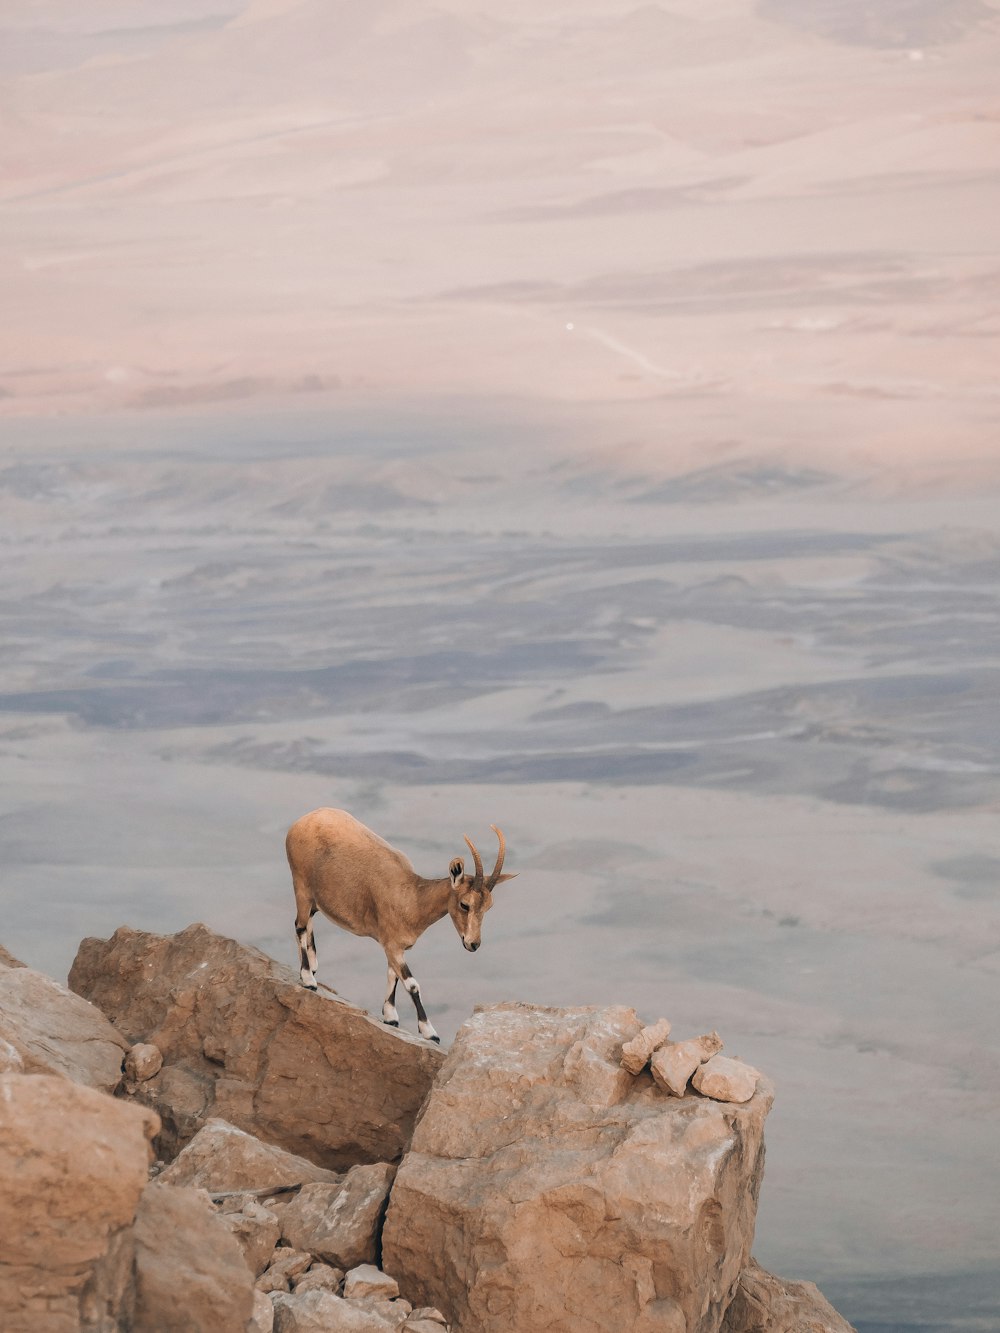 a deer on a rocky cliff